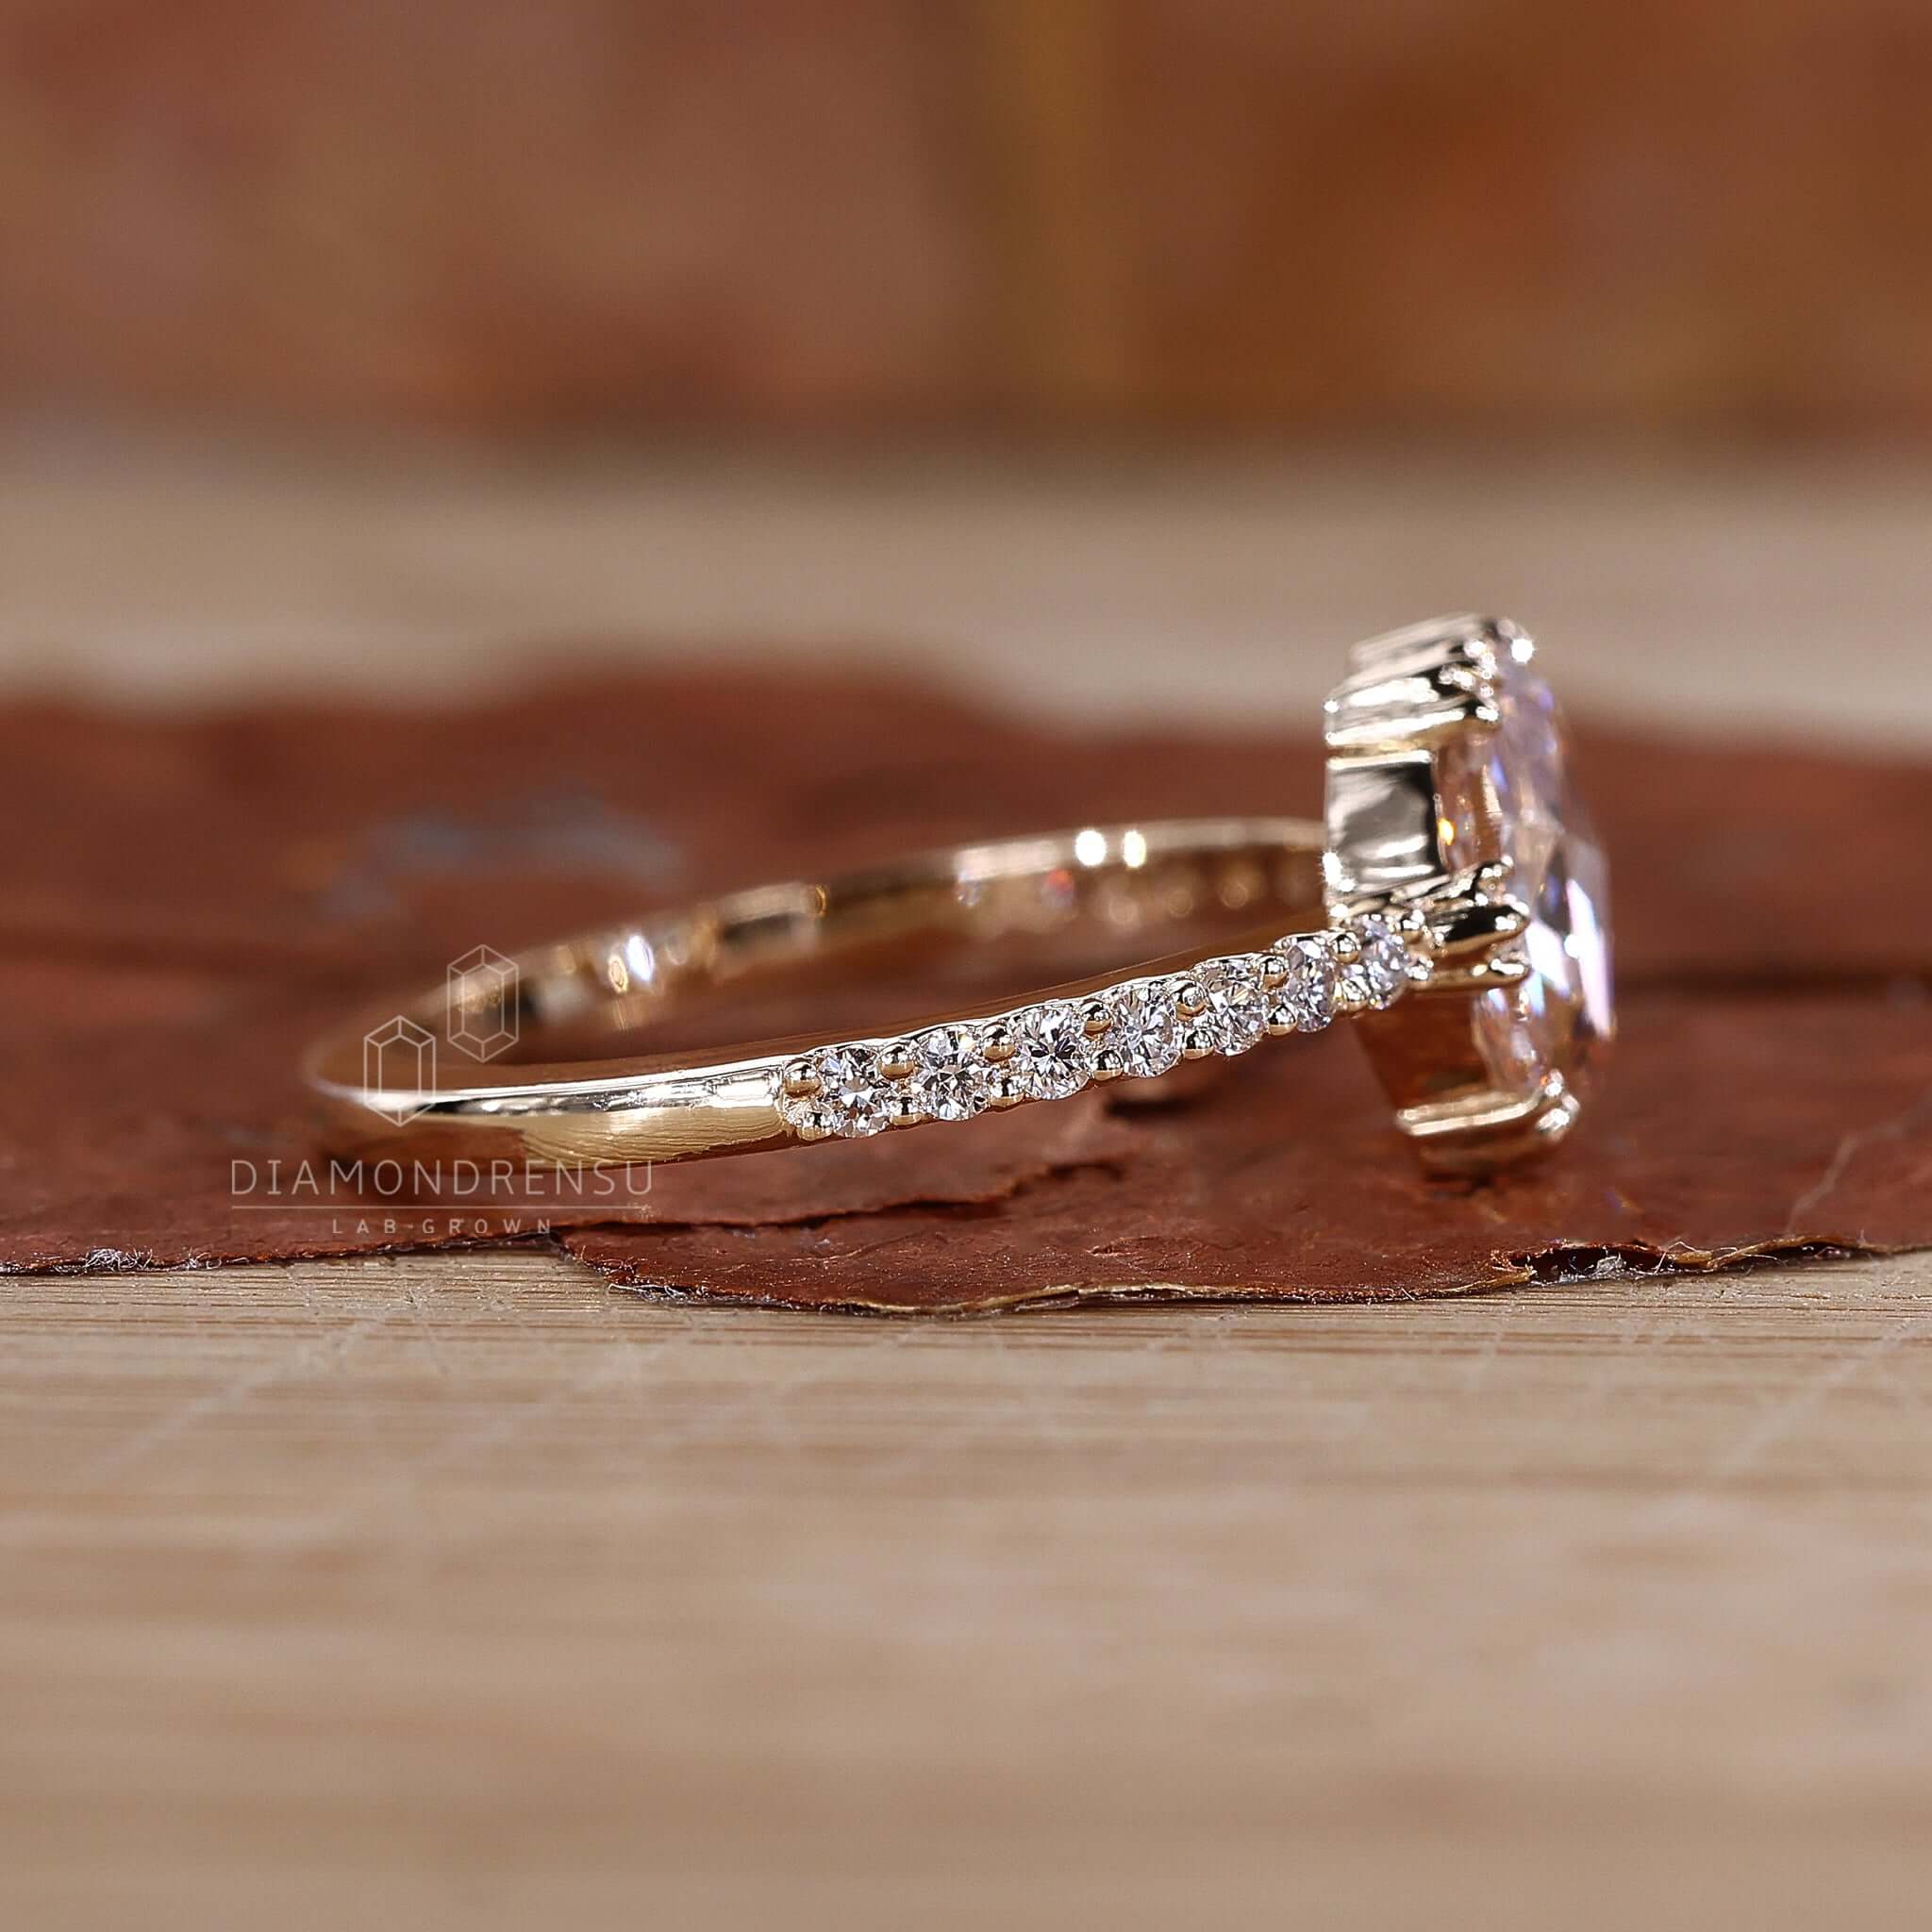 Vintage rose cut diamond ring with intricate craftsmanship 